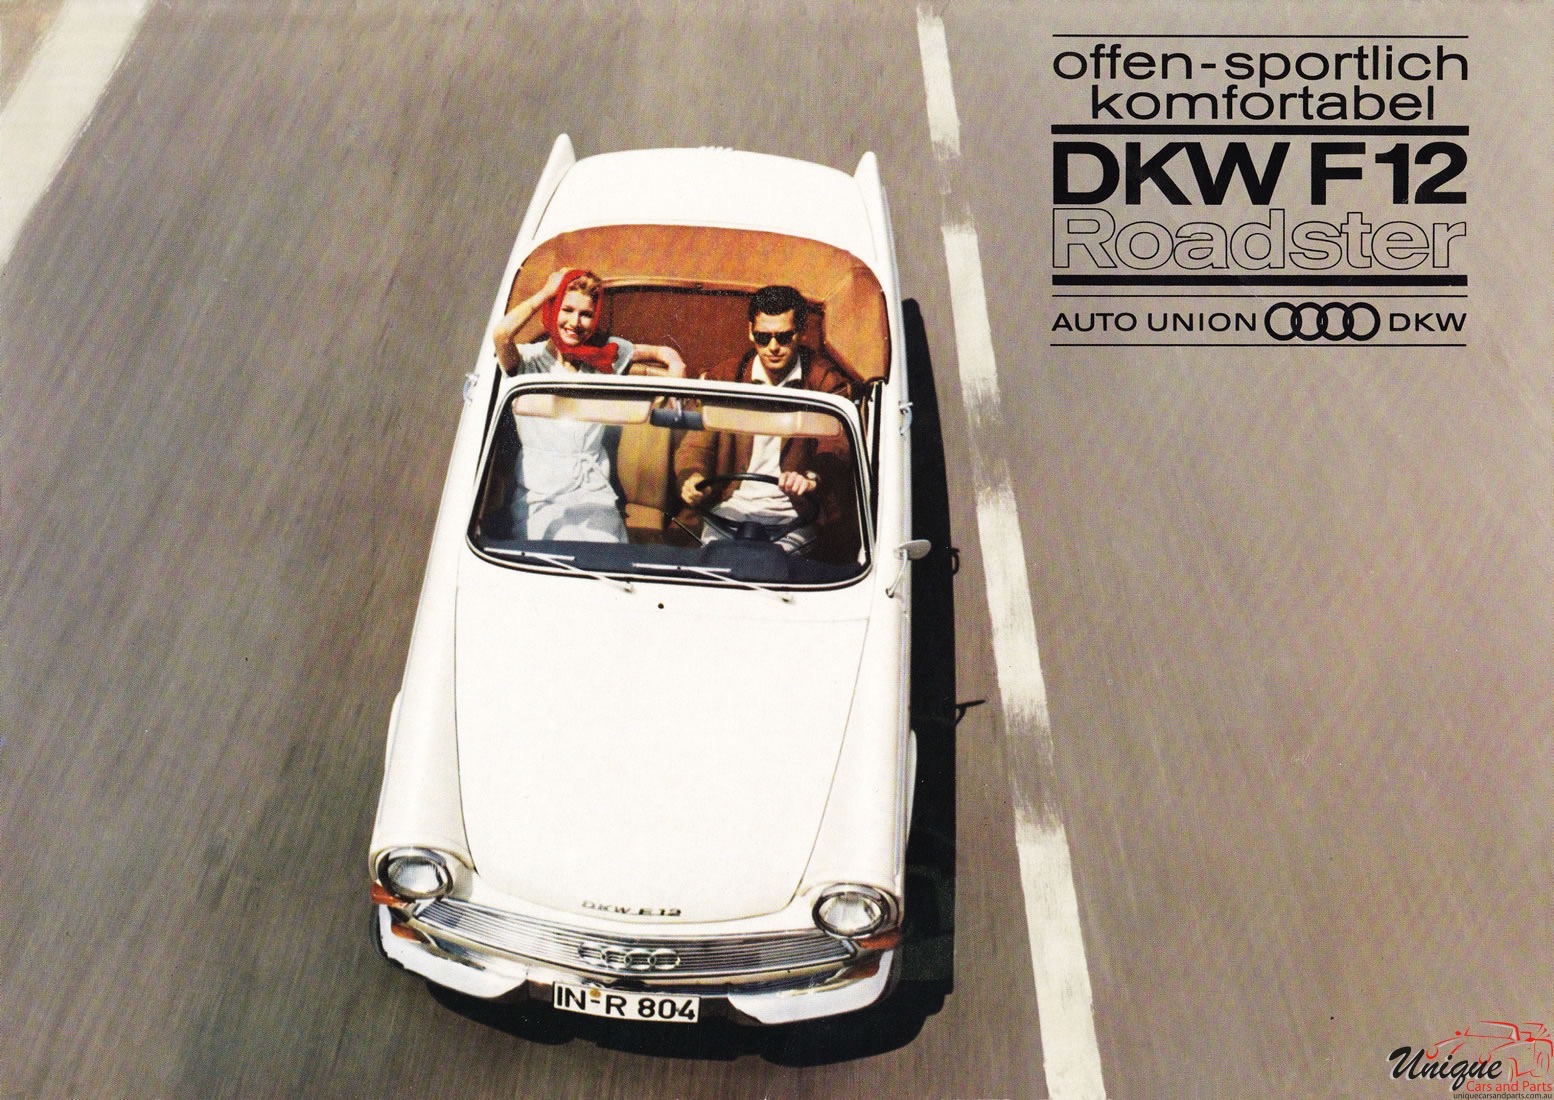 1964 DKW F12 Roadster Brochure Page 1